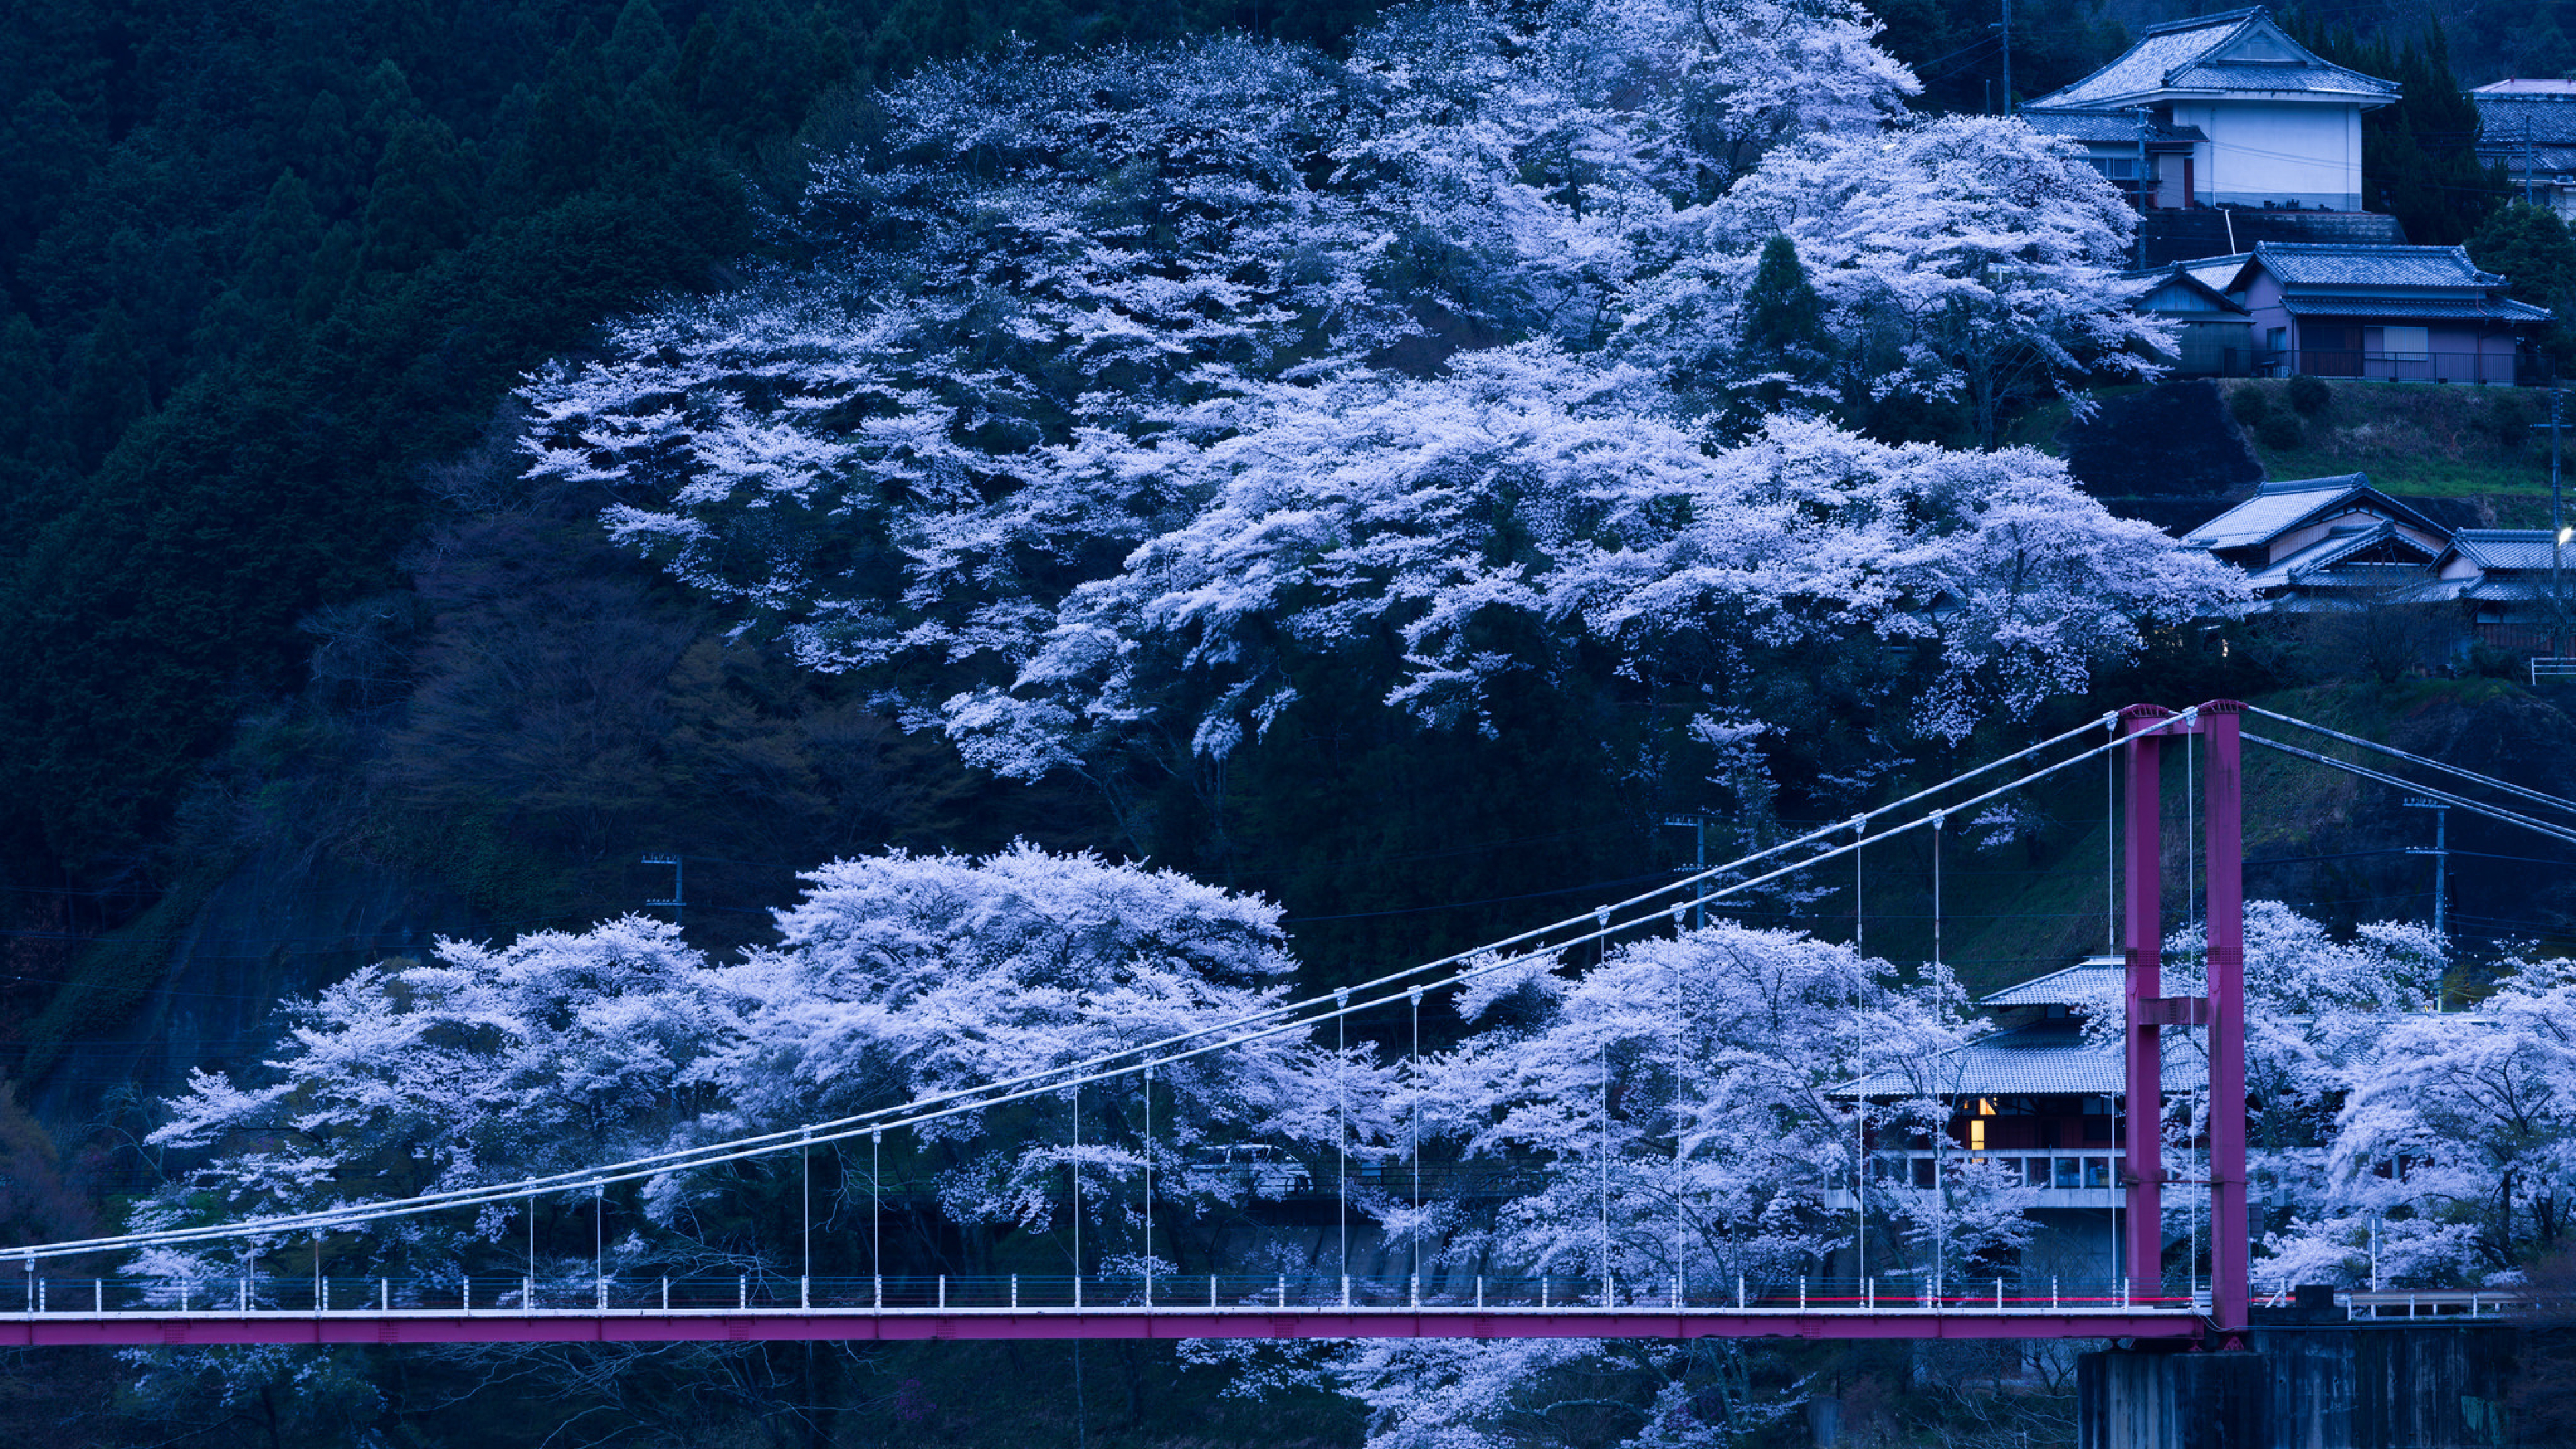 3840x2160 Japan Bridge Sakura 4k Wallpaper Hd Nature 4k Wallpapers Images Photos And Background Wallpapers Den